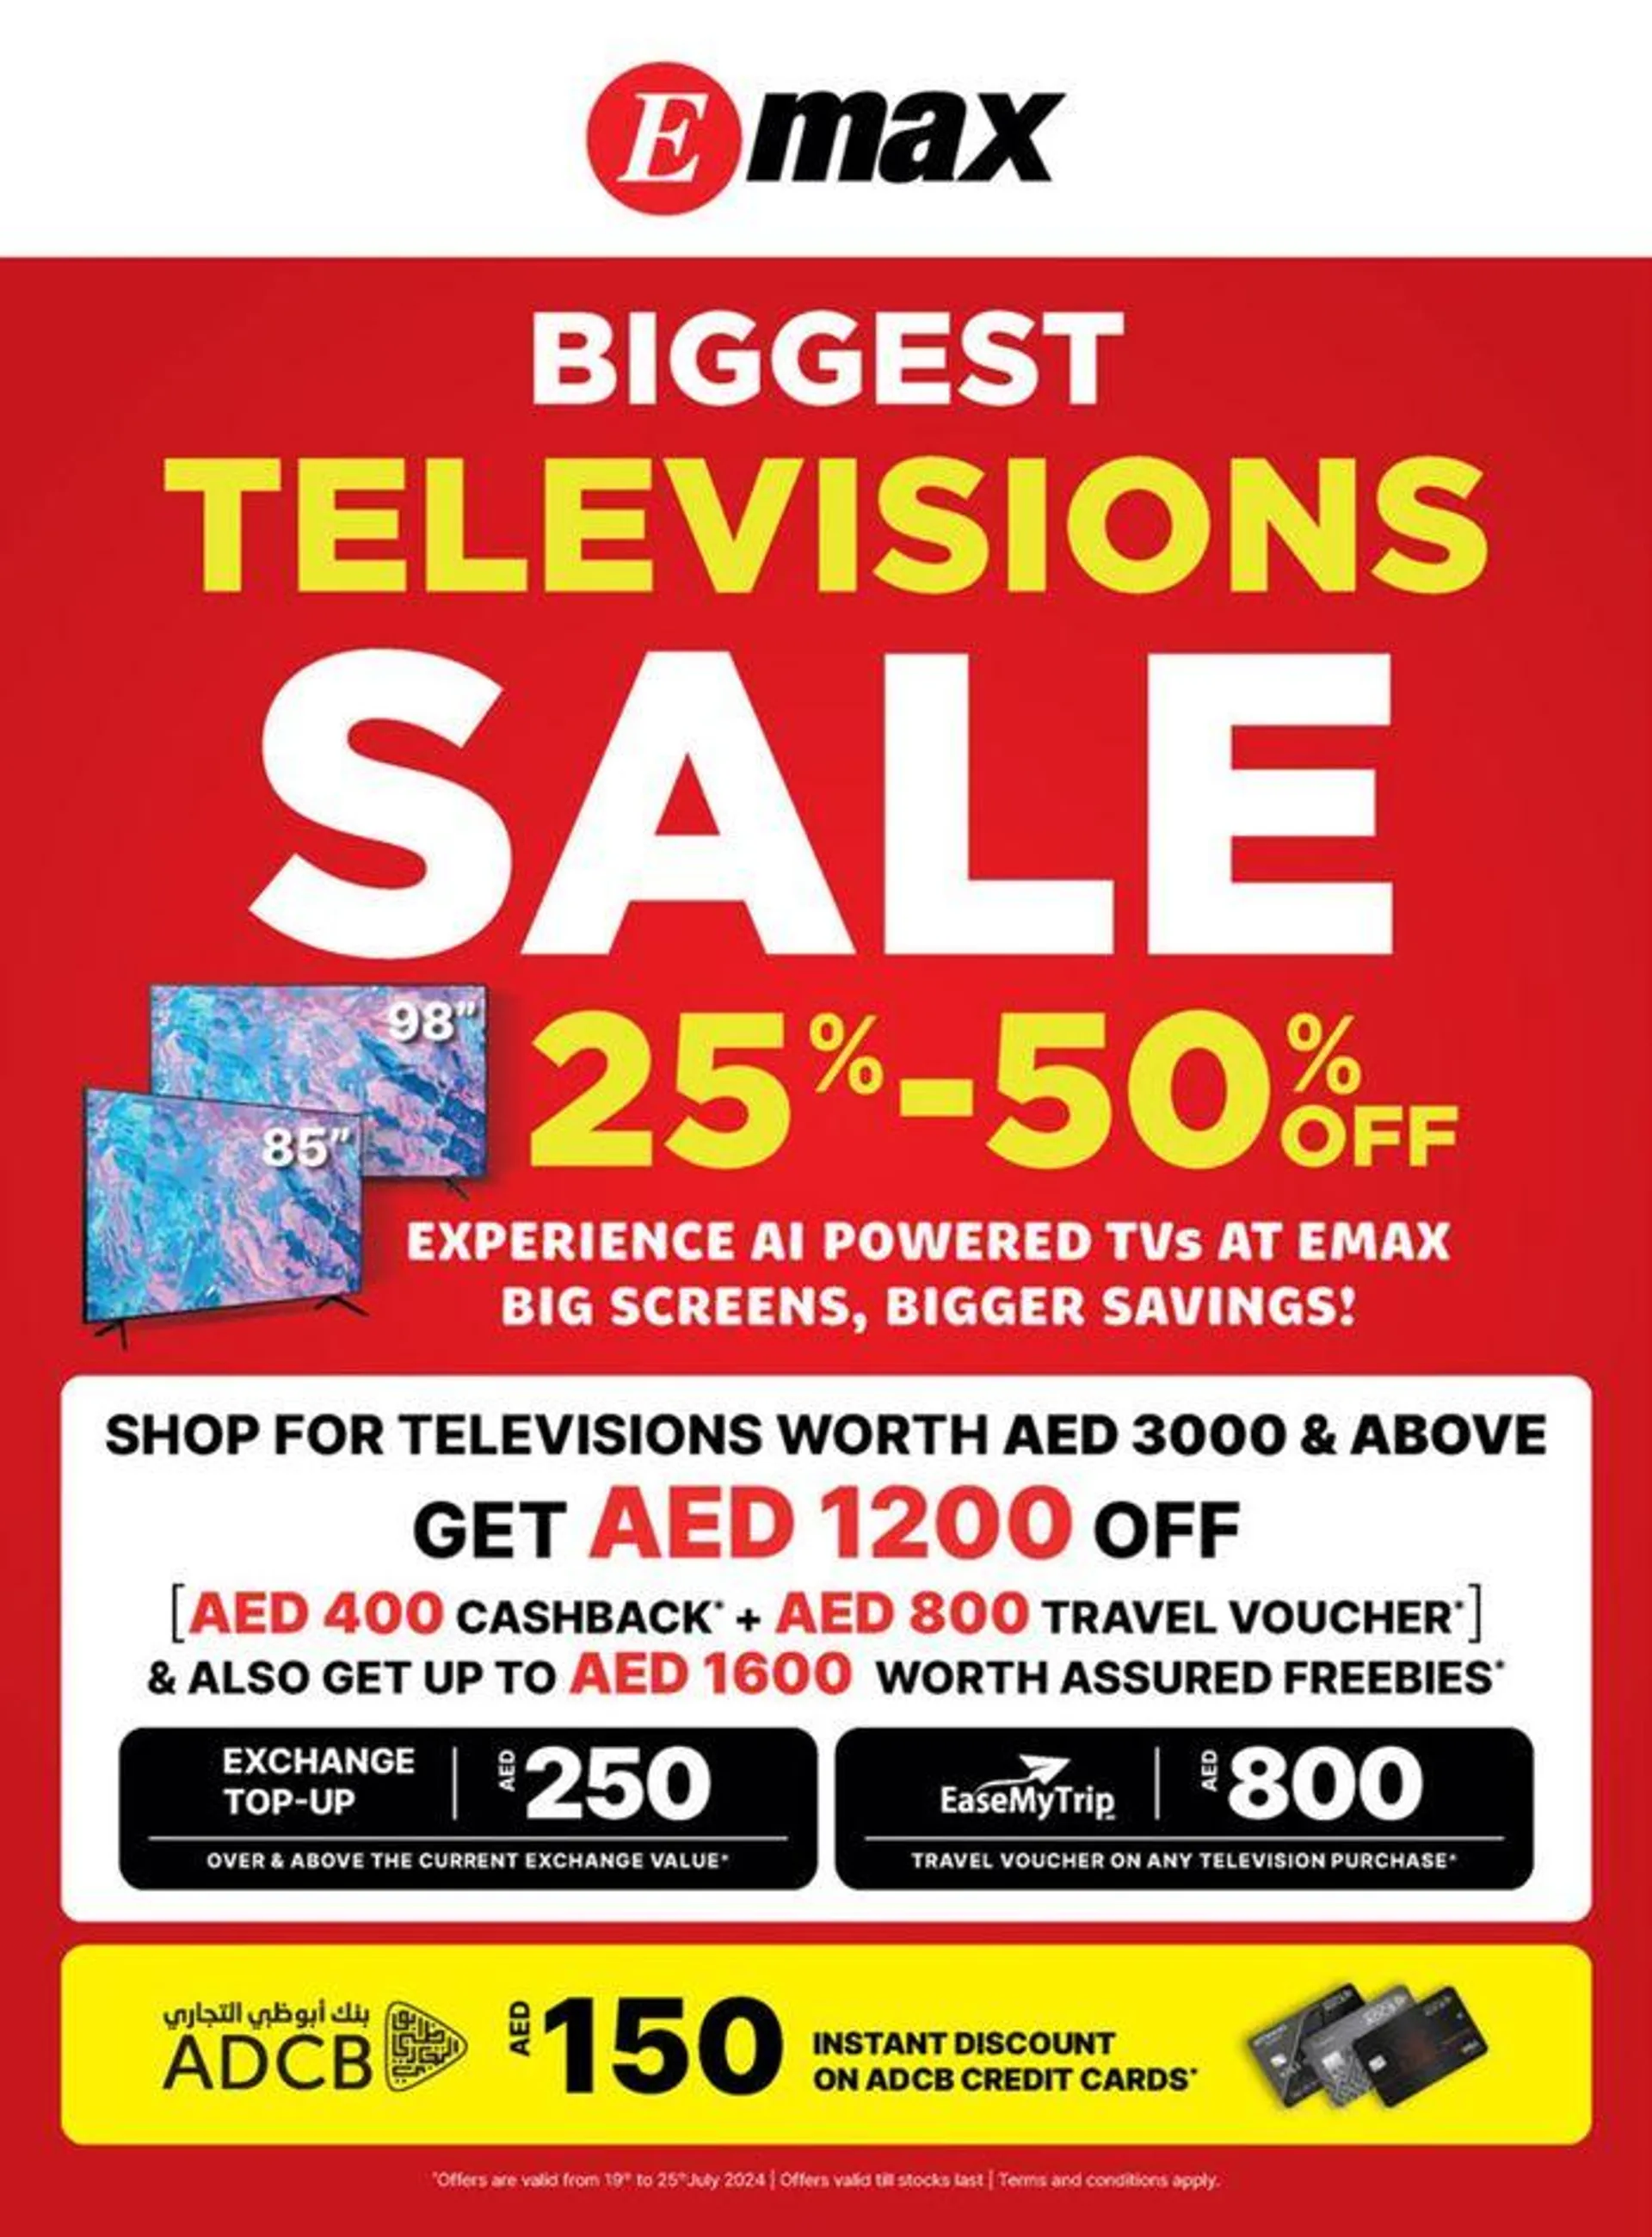 Biggest Televisions Sale - 1